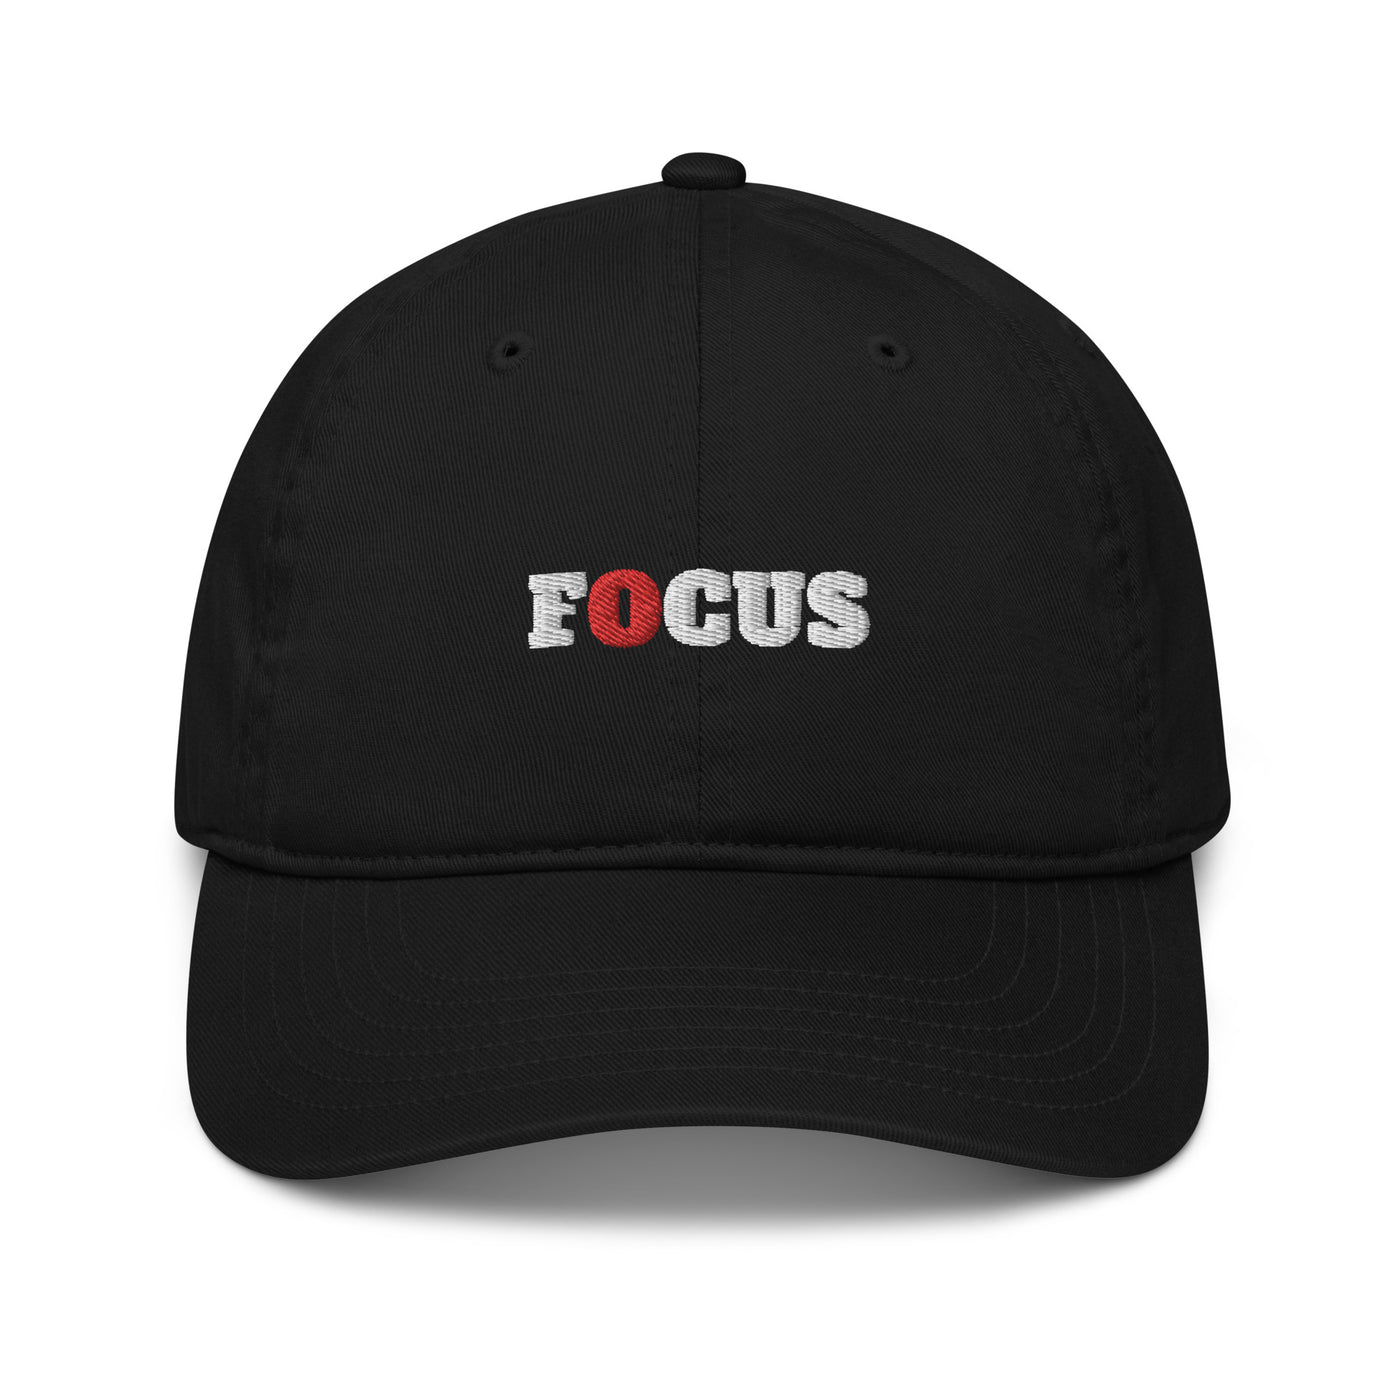 Organic Black Baseball Cap - Focus